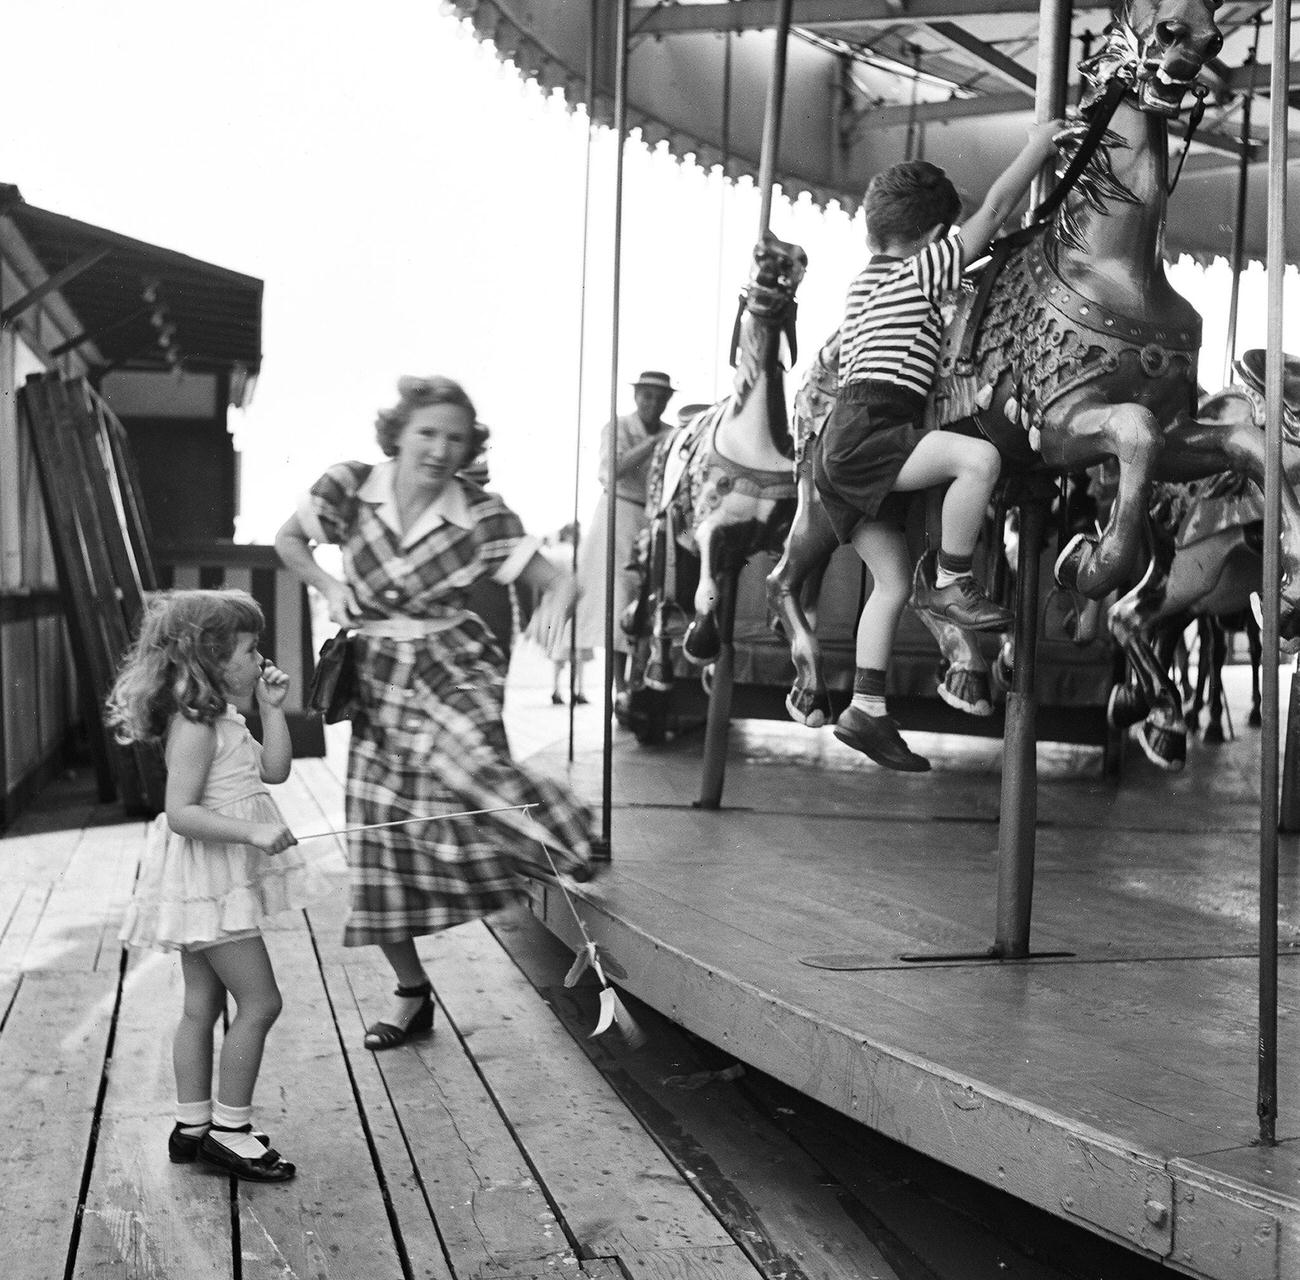 Boy Climbs Onto Carousel Horse As Mother Approaches Sister At Coney Island, 1948